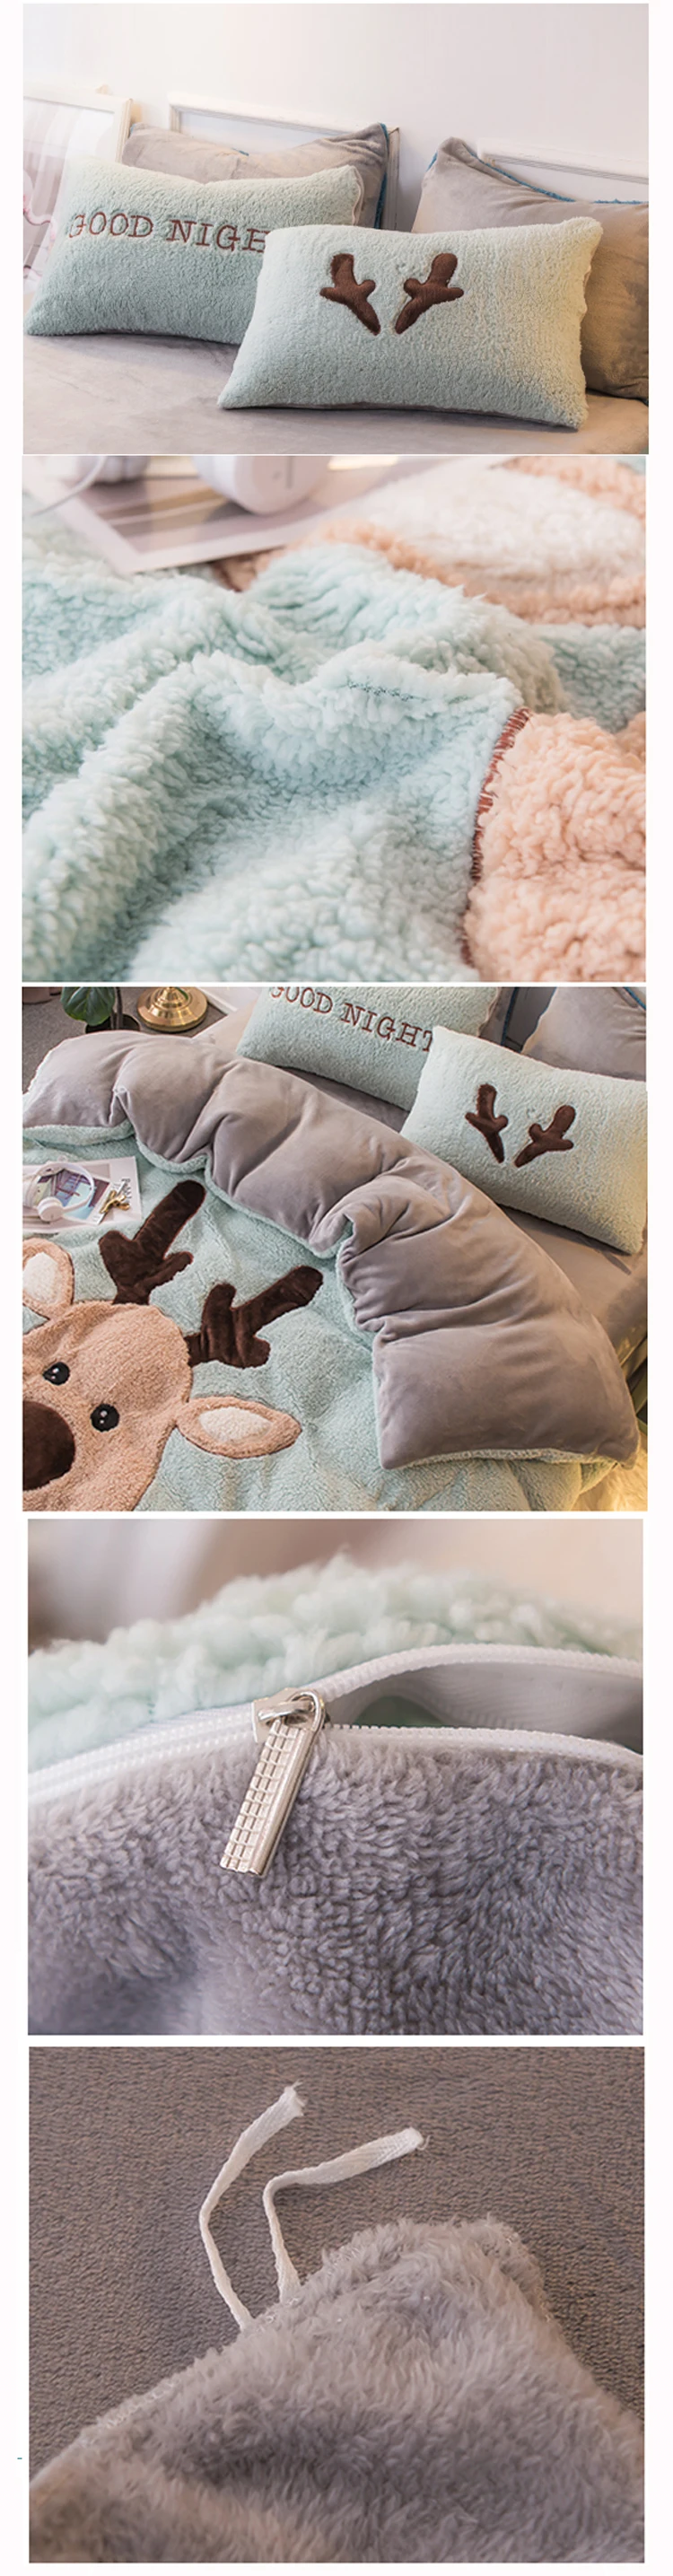 Christmas Deer 2-in-1 Dual-Purpose Fleece Blanket Kids Duvet Cover Bedding Sets